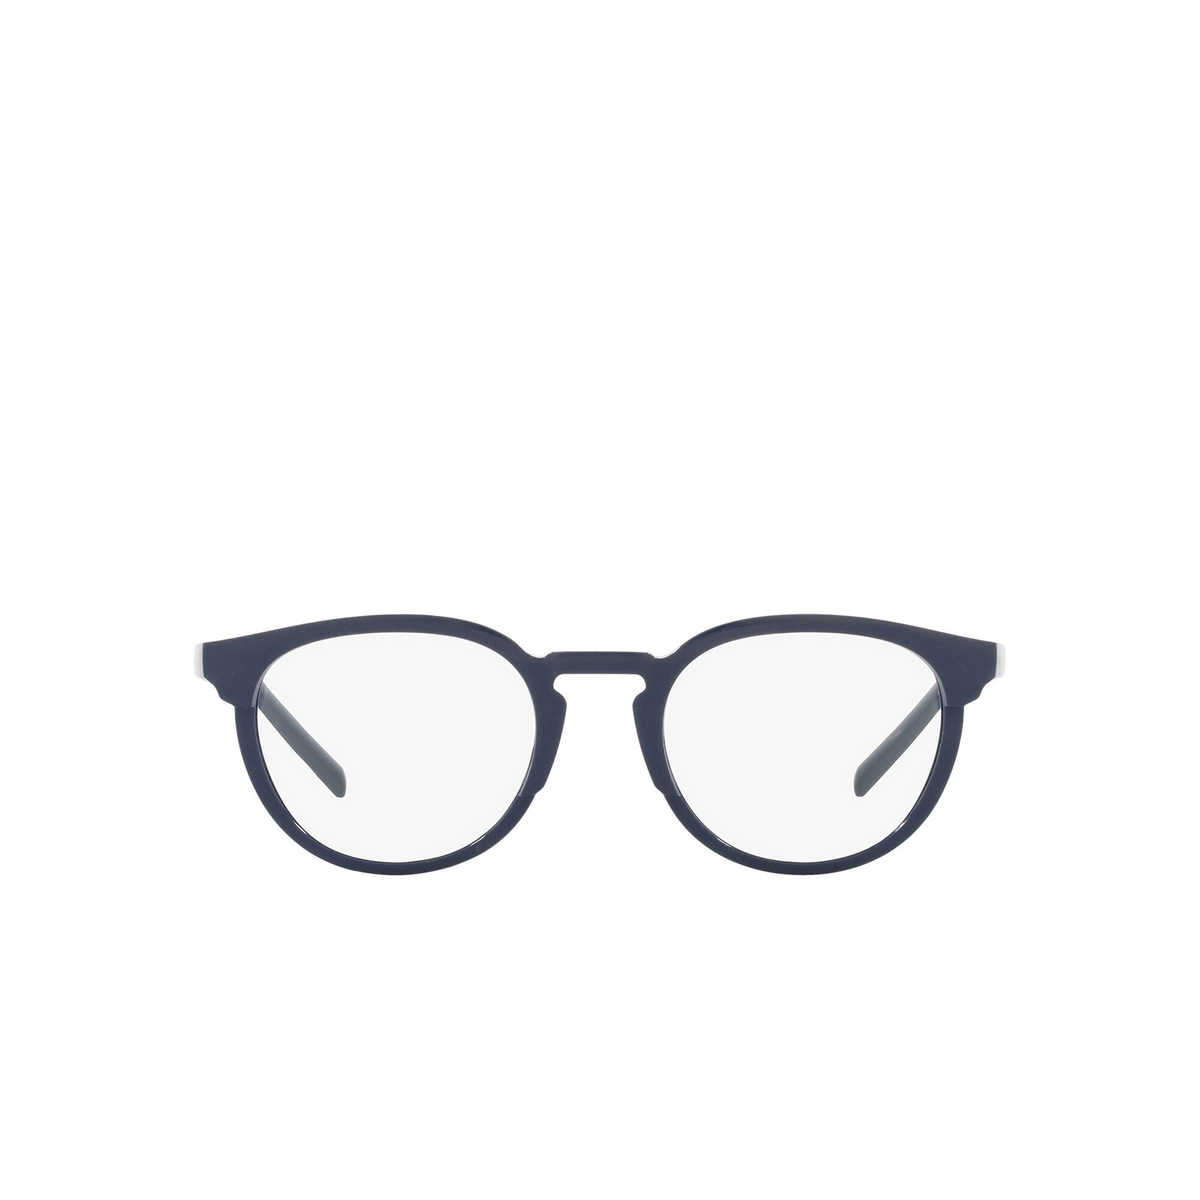 Dolce & Gabbana® Round Eyeglasses: DG5067 color Blue 3294 - front view.